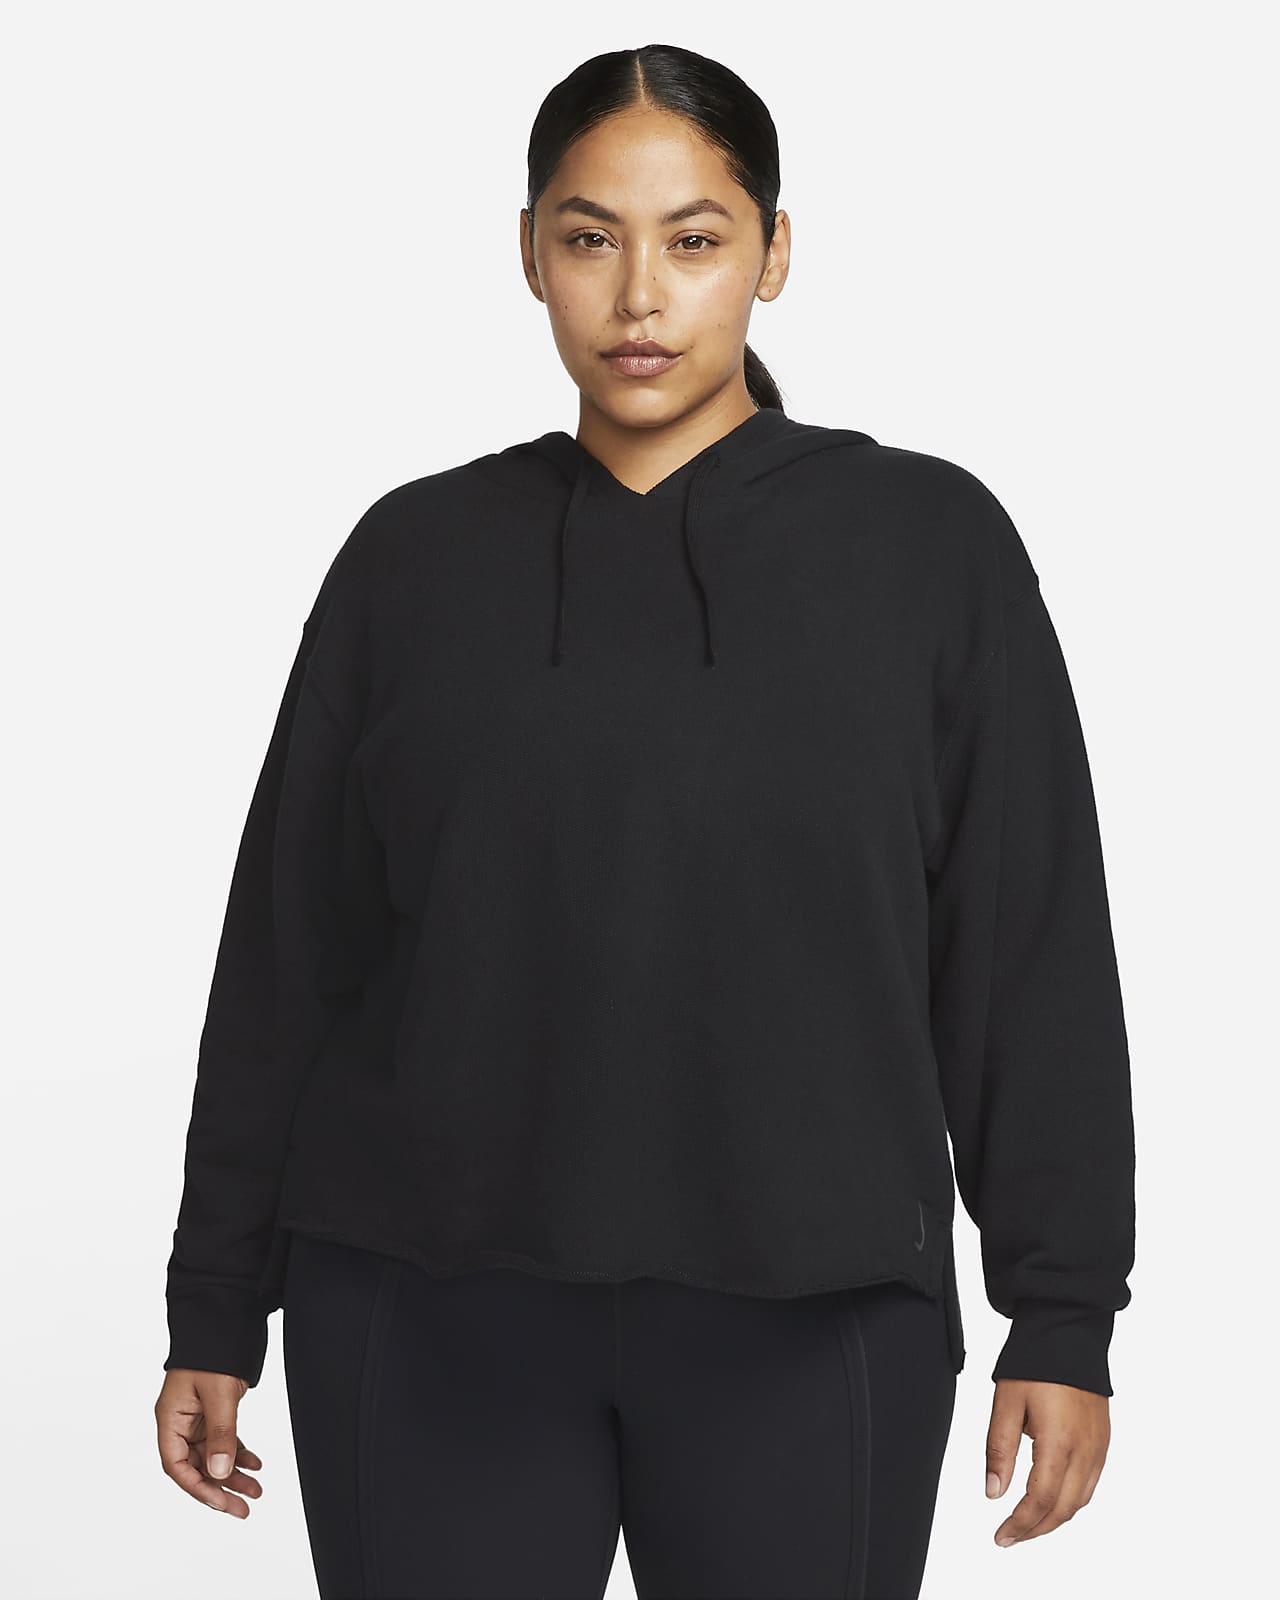 Nike Yoga Women's Fleece Cover-Up (Plus Size)